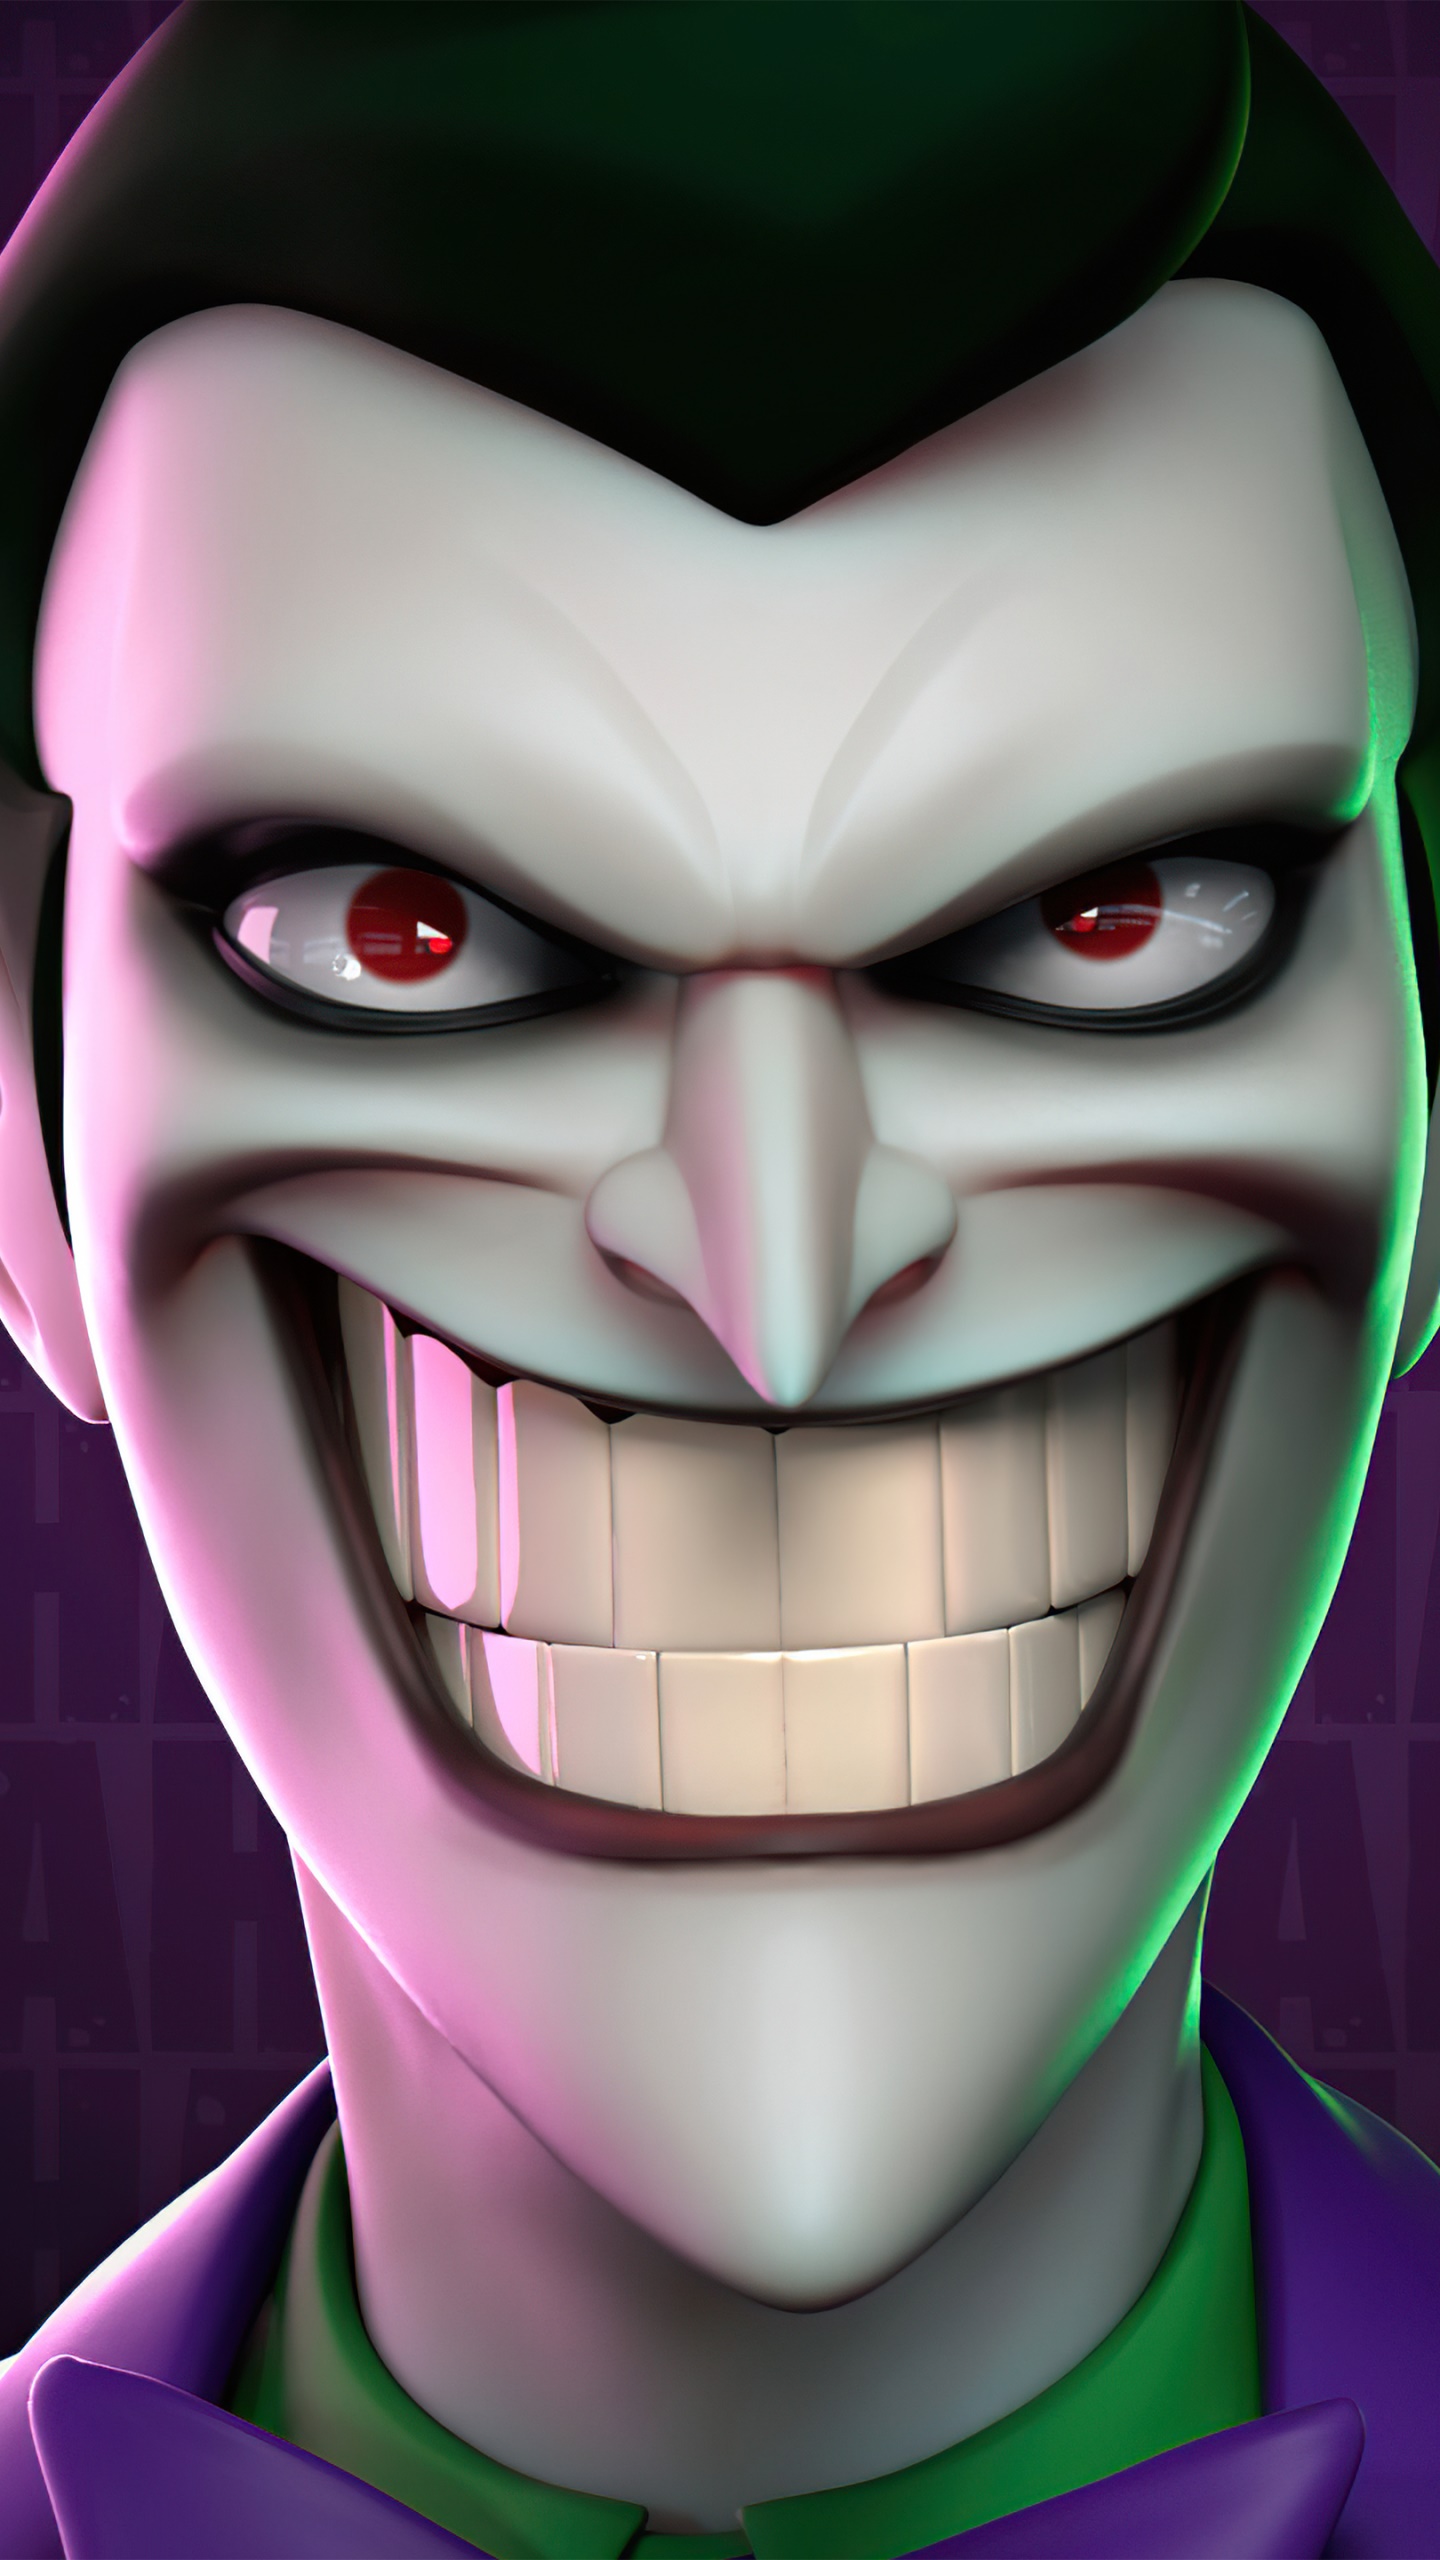 Wallpaper / TV Show Batman: The Animated Series Phone Wallpaper, Joker, 1440x2560 free download